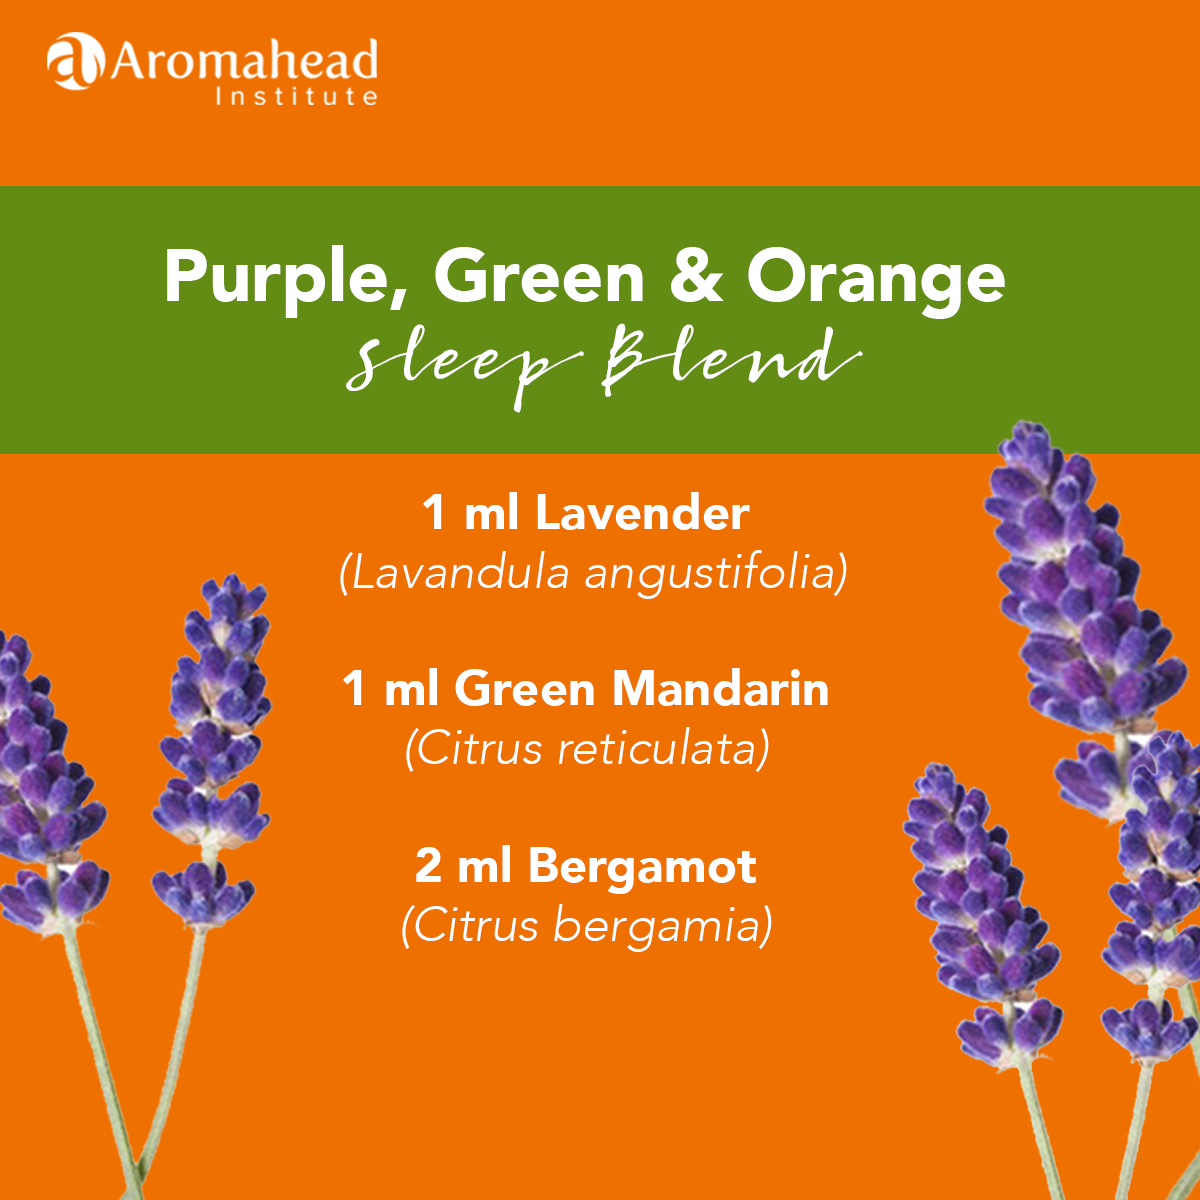 Blog-Sept 10-3 Purple Green and Orange Sleep Blend - Recipe- 600 x 600